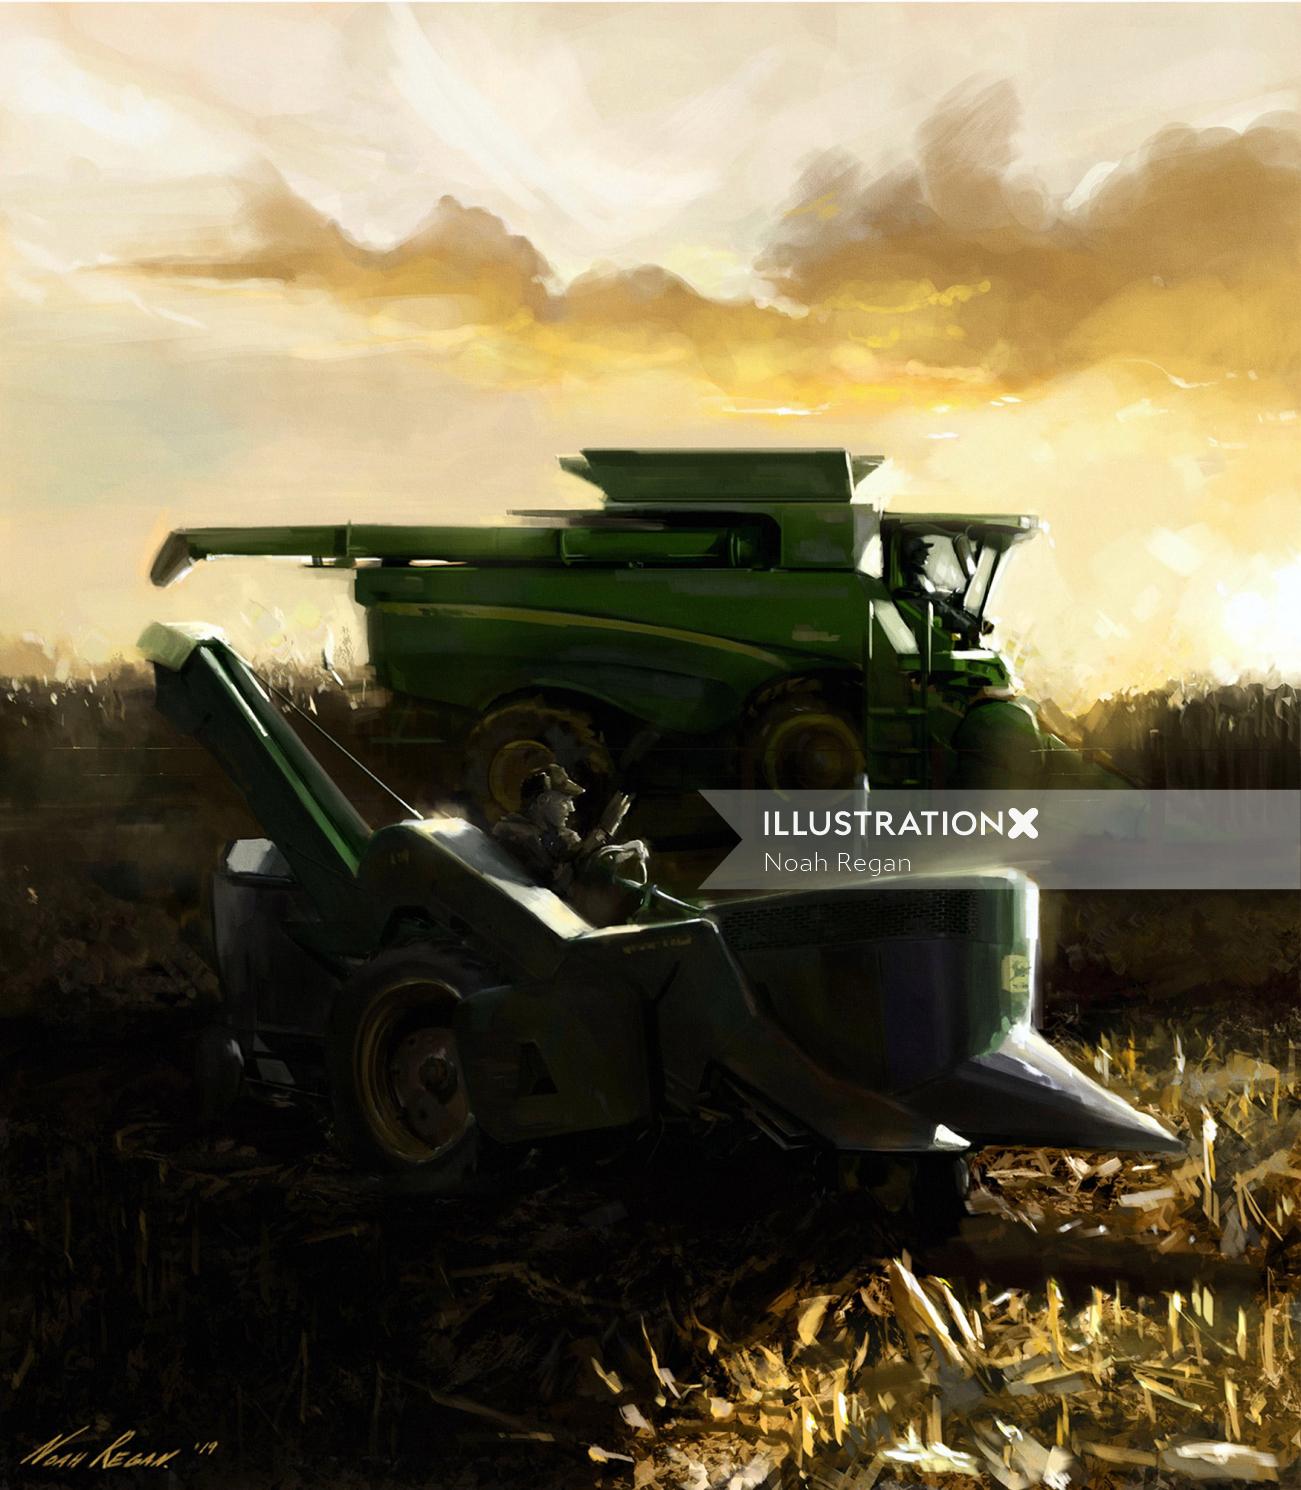 Machine harvesting crops